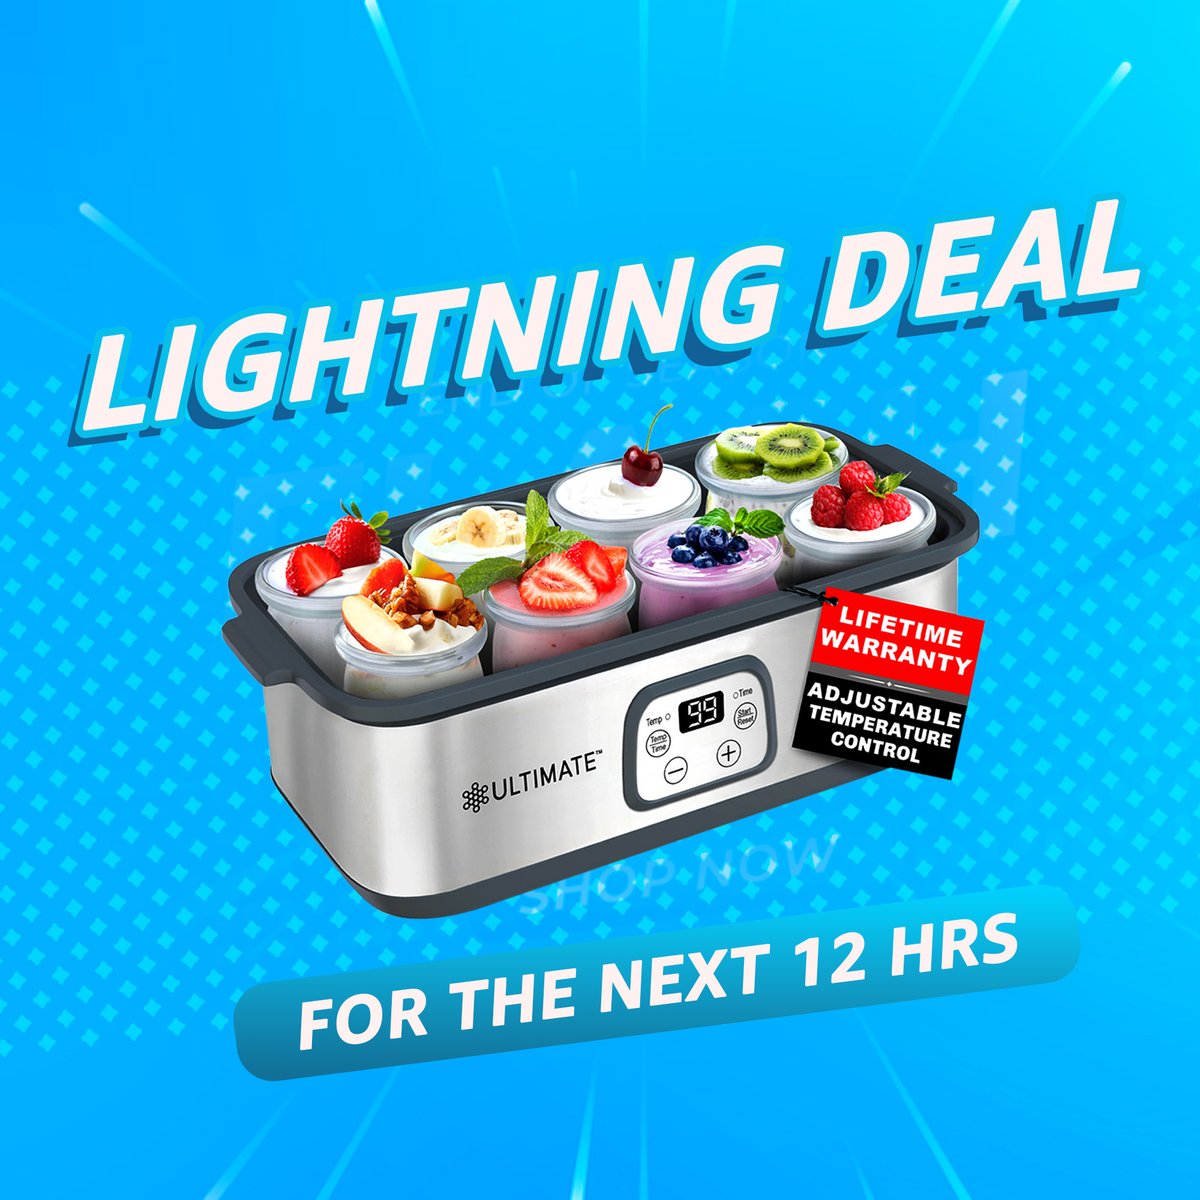 Ultimate Yogurt Maker is on Lightning Deal! Get it now! #amazonfinds #UltimateHealth #ultimateyogurtmaker #amazonlightningdeal